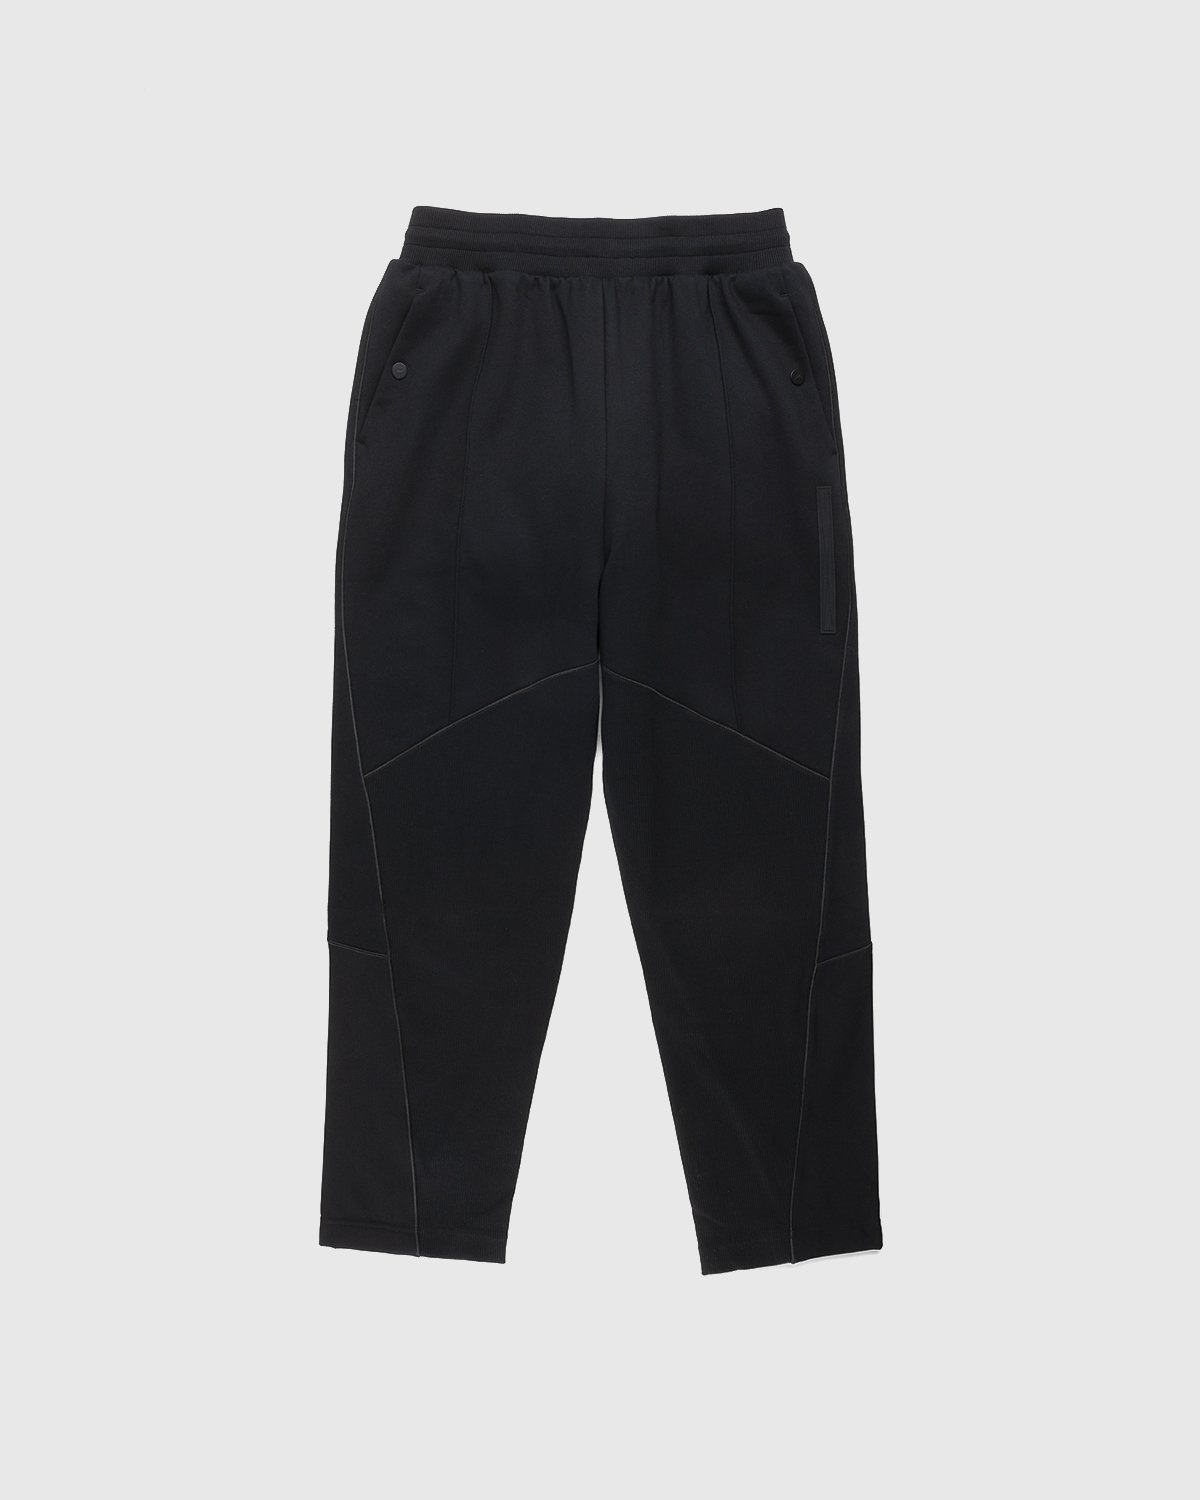 A-Cold-Wall* – Granular Sweatpants Black - Pants - Black - Image 1